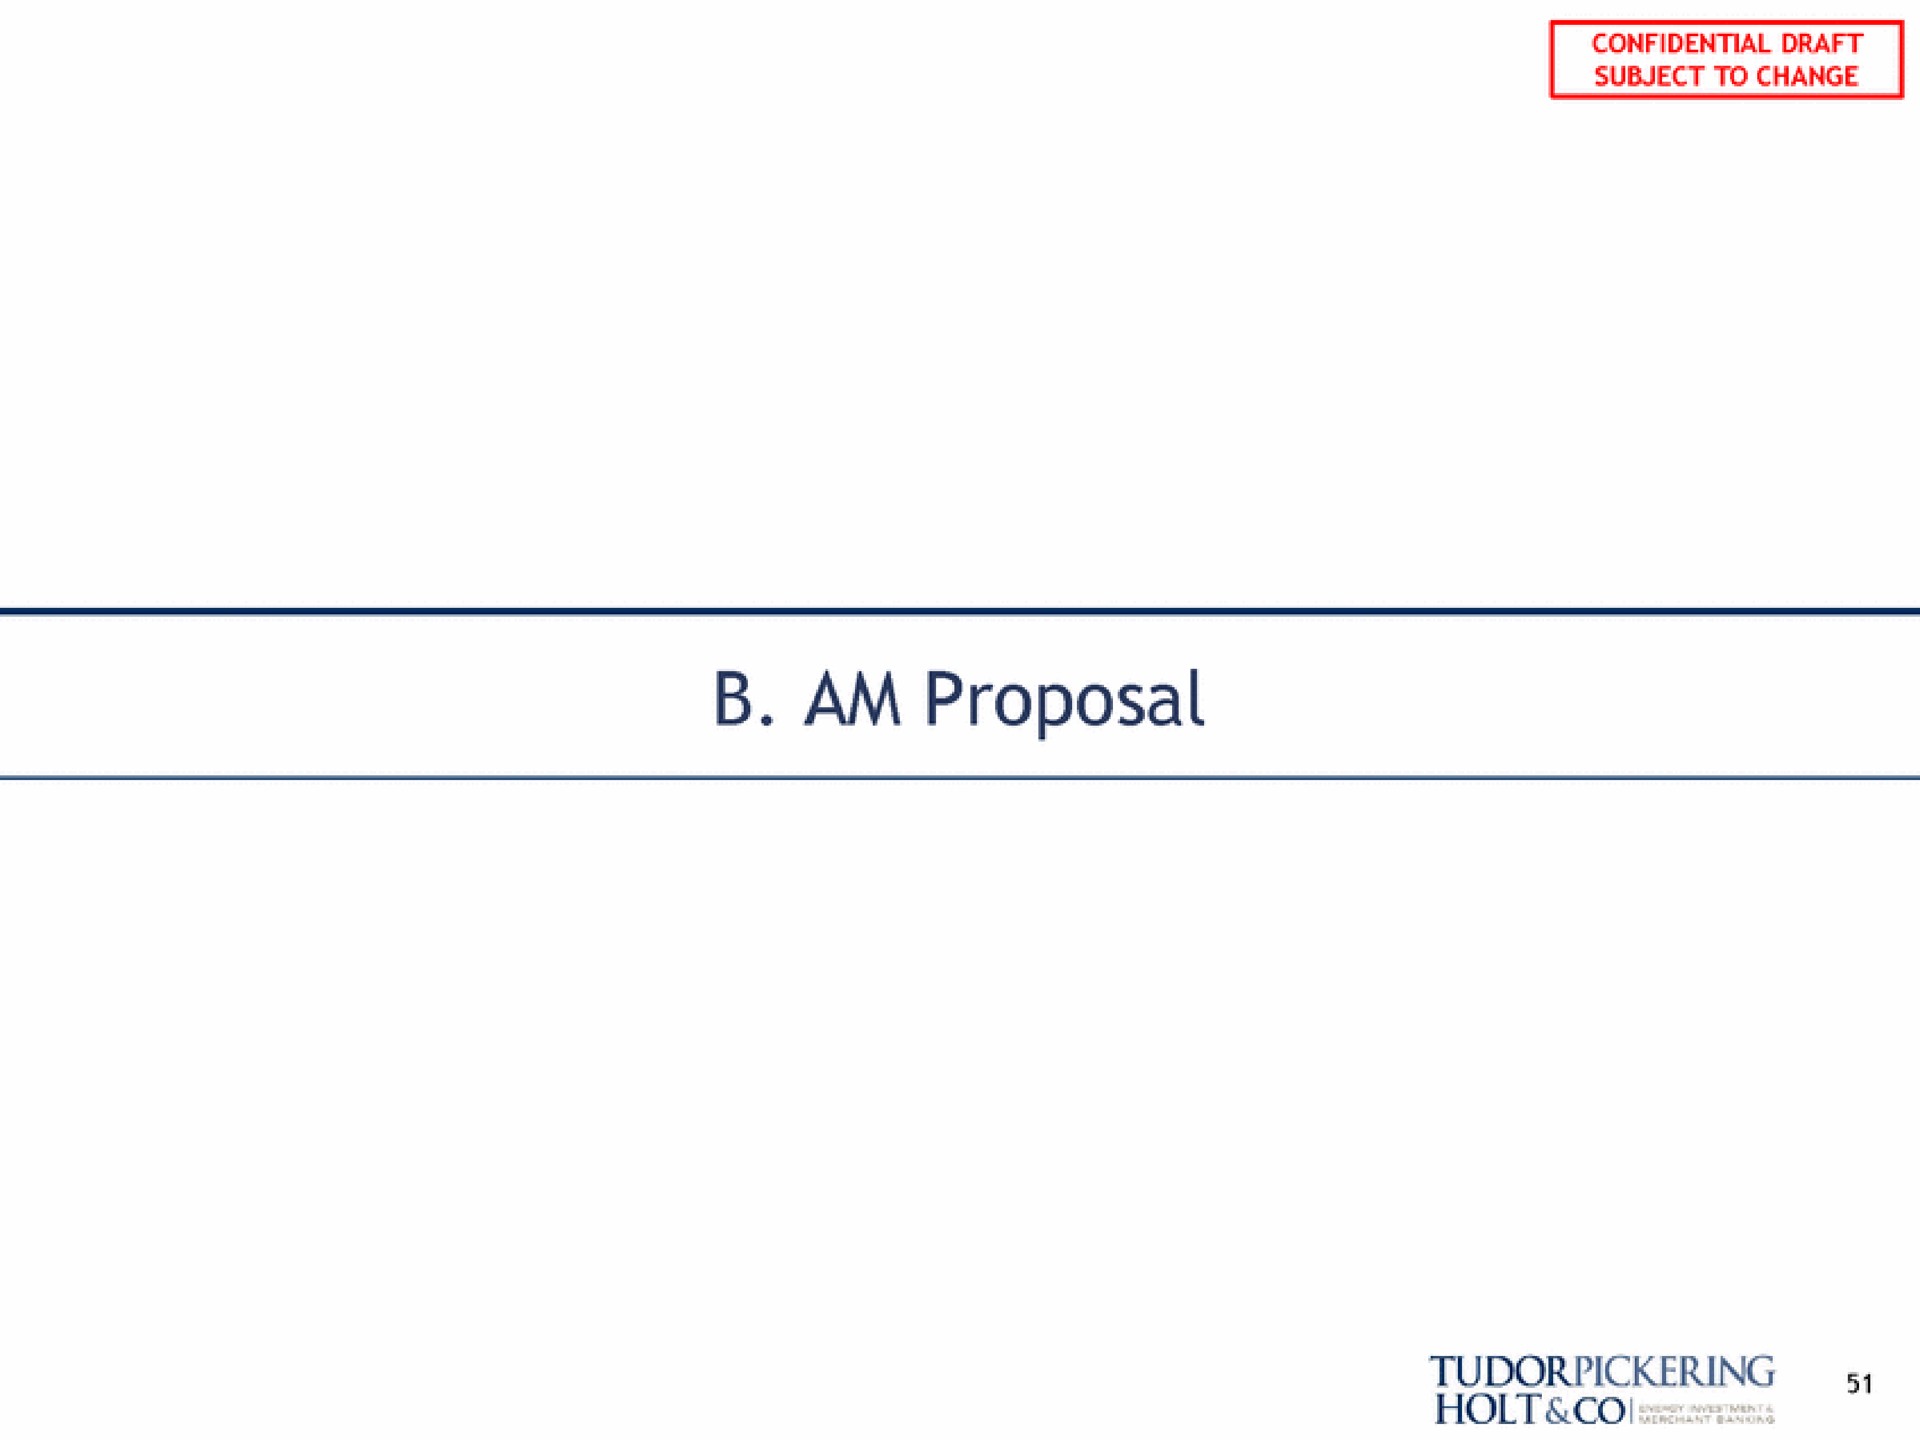 am proposal | Tudor, Pickering, Holt & Co